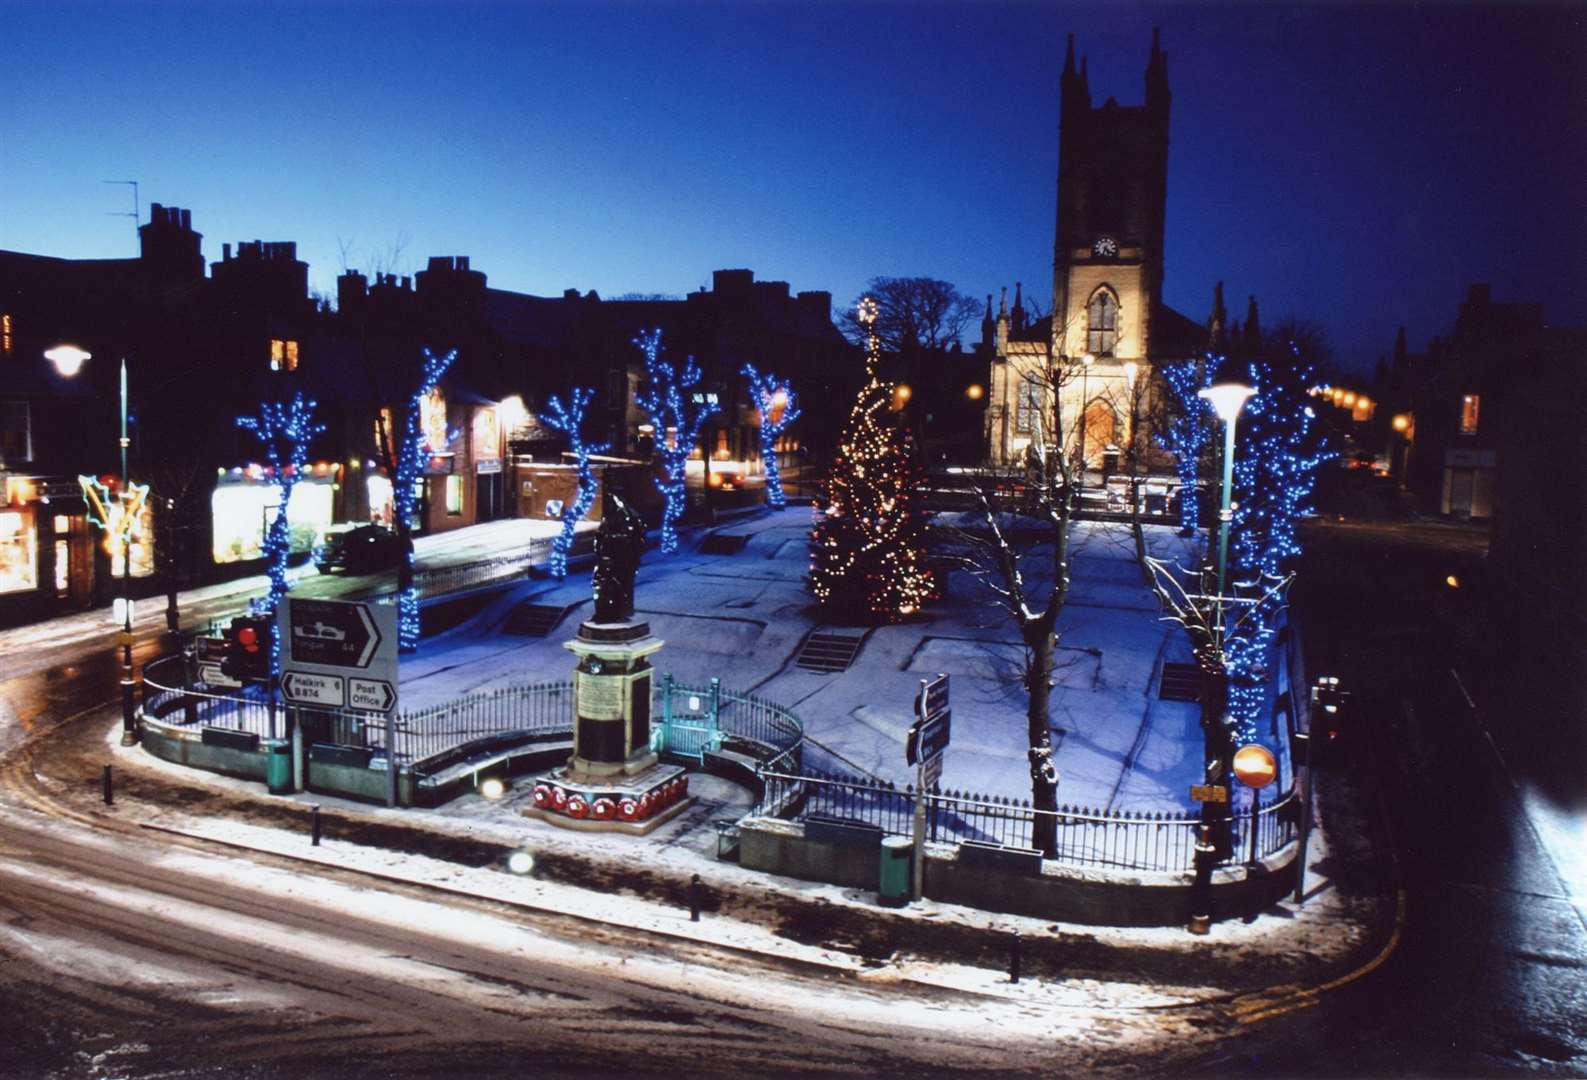 A view of Thurso's St John's Square at Christmas.